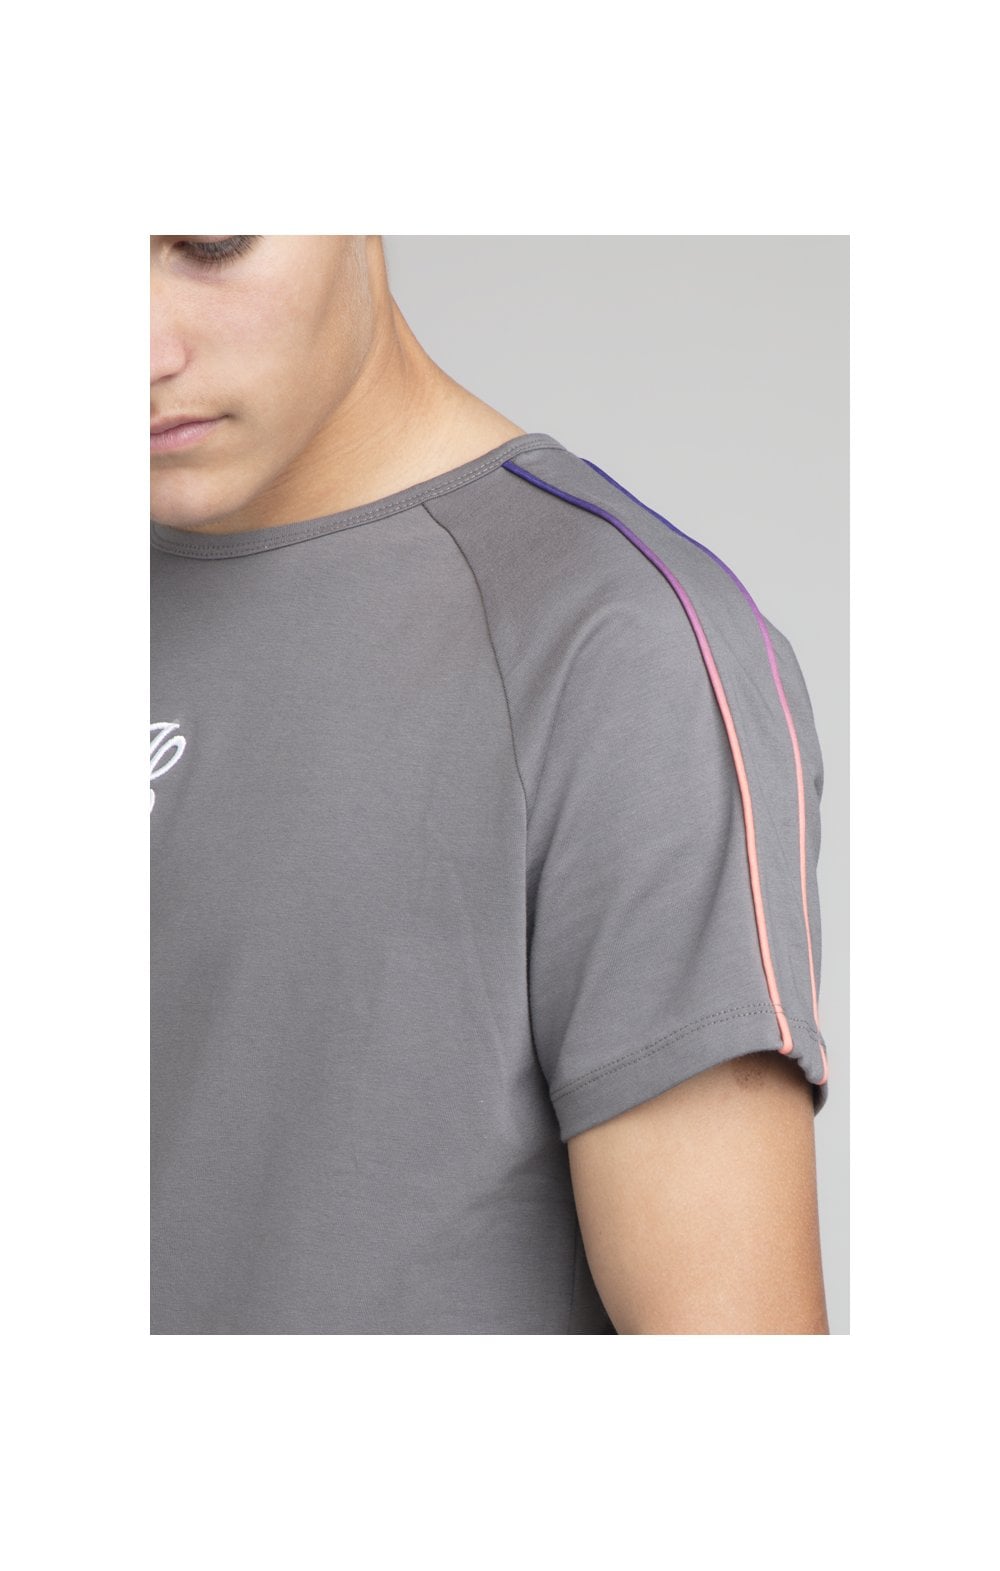 Boys Illusive Grey Raglan T-Shirt (1)